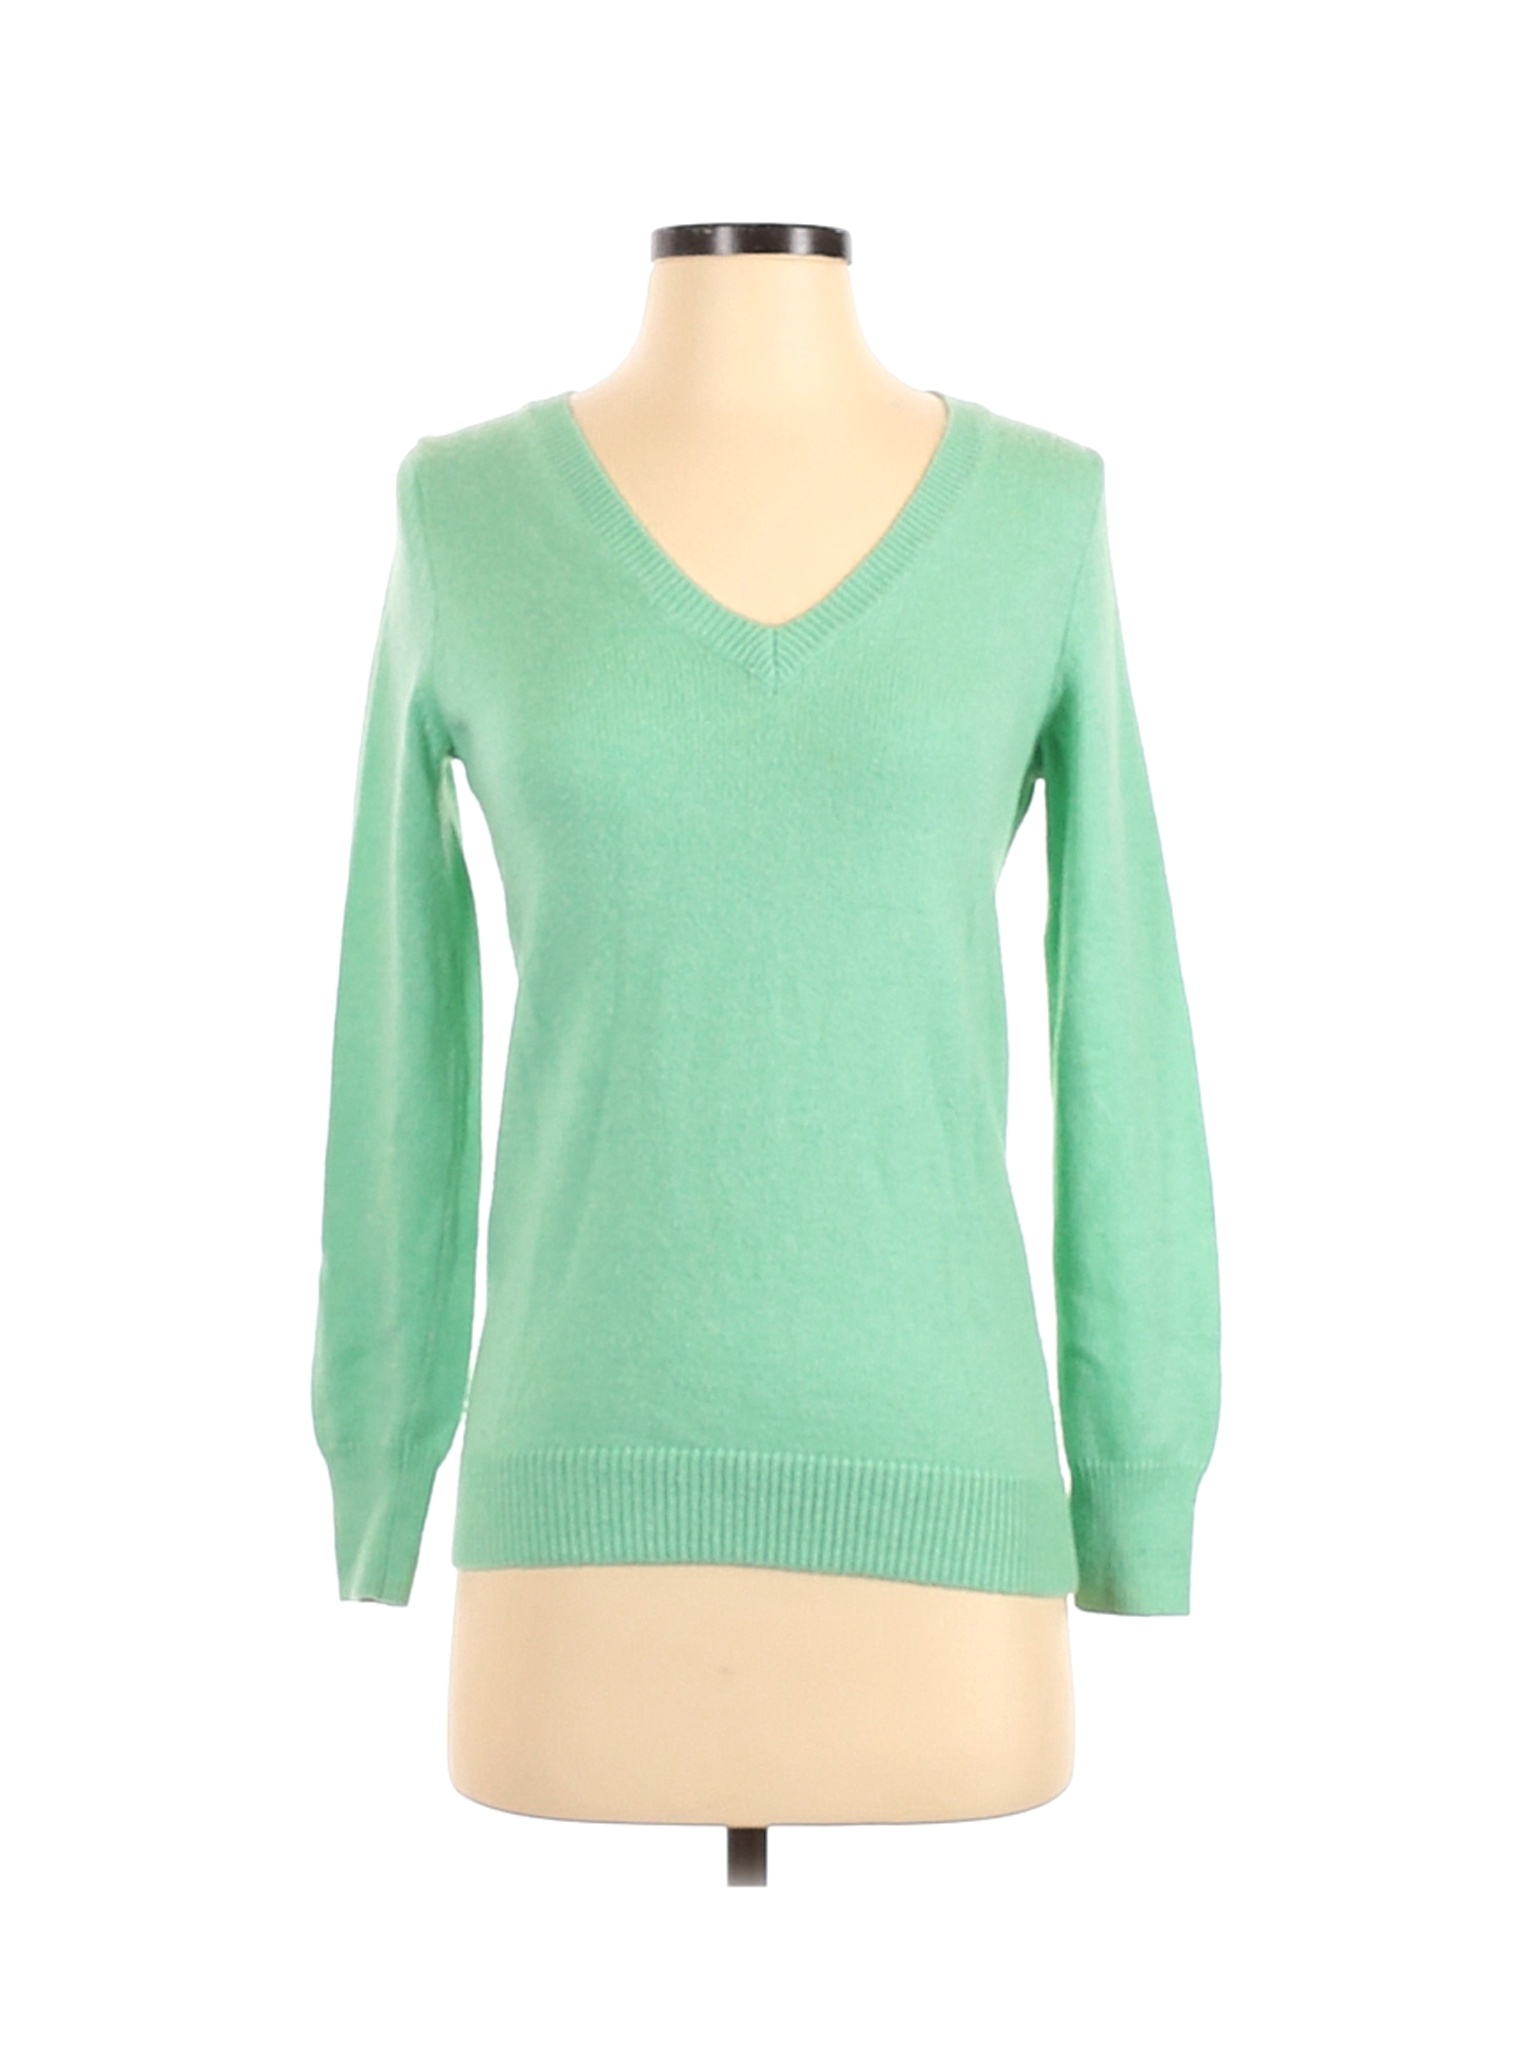 Old Navy Women Green Sweatshirt S | eBay